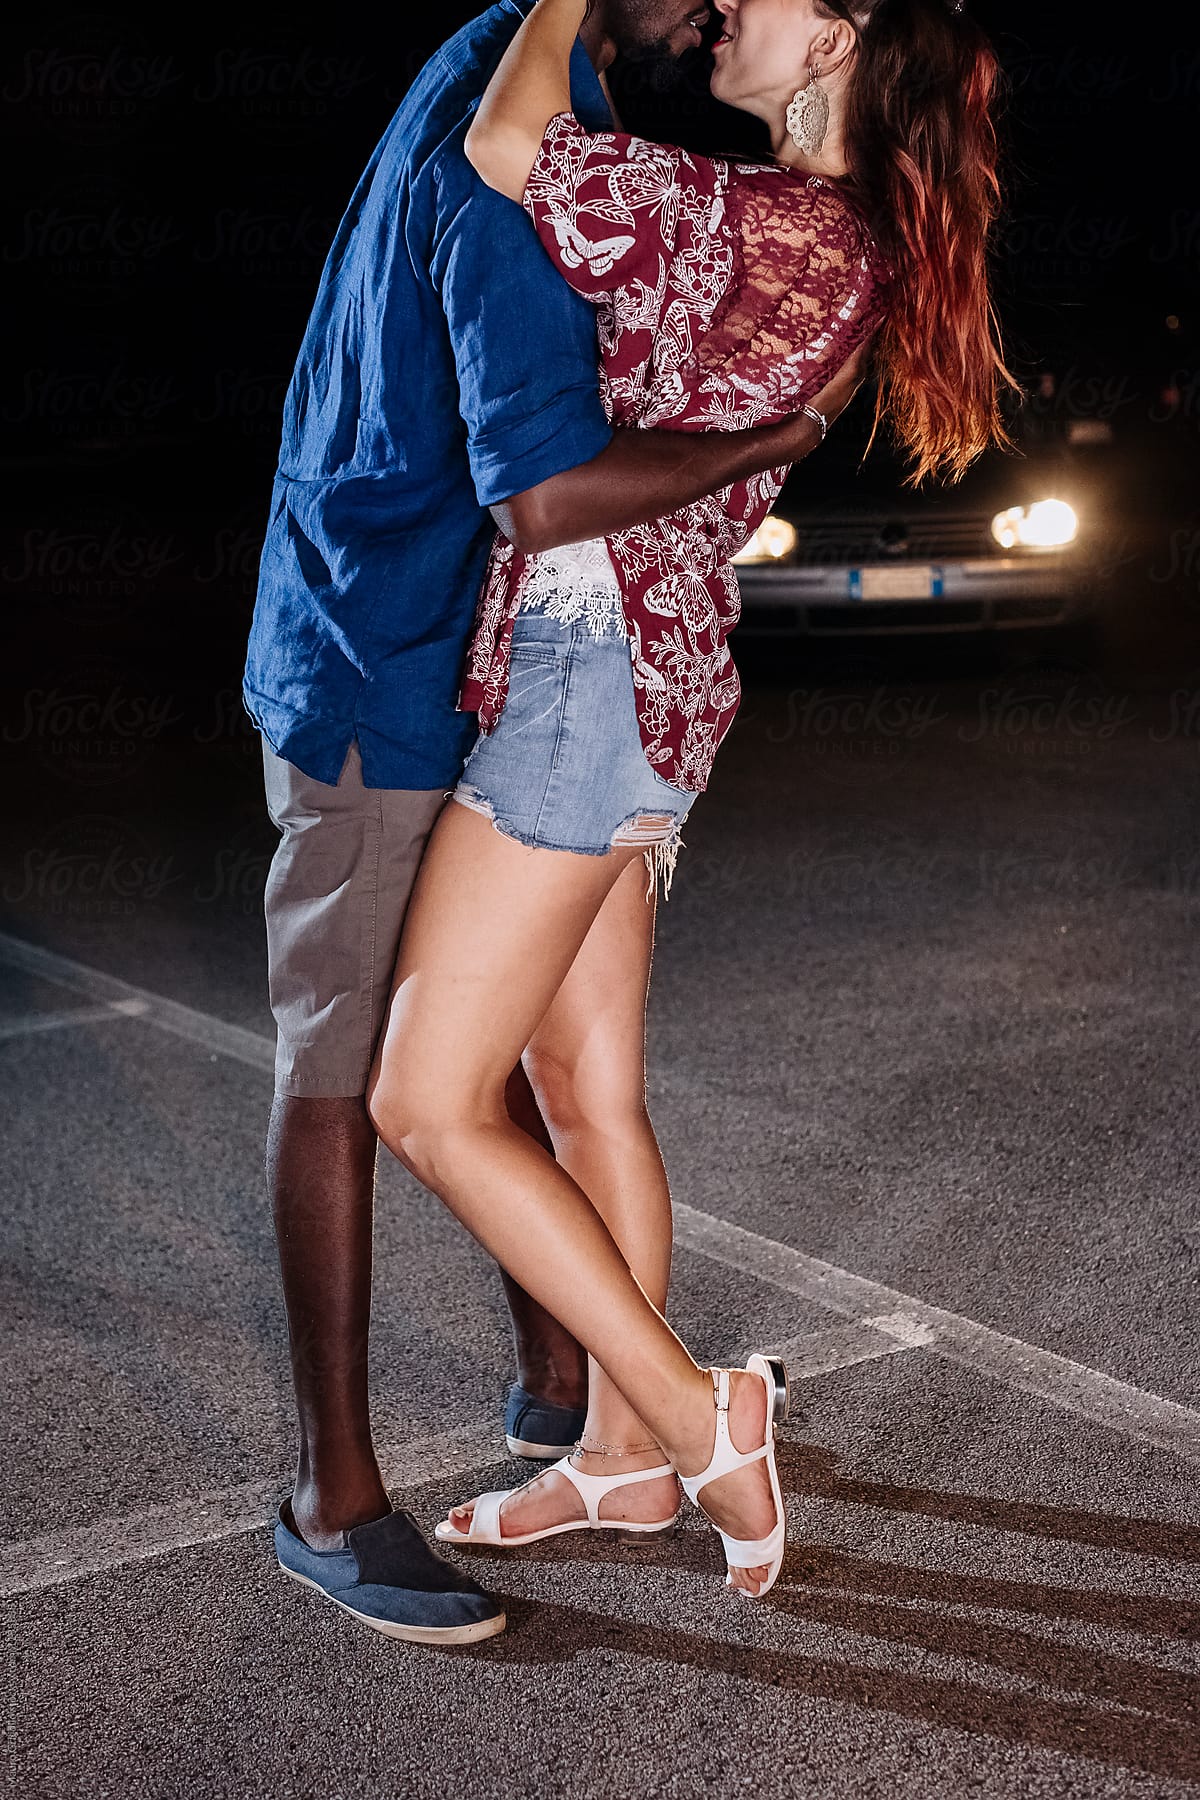 amy rowles add black man kissing white woman photo